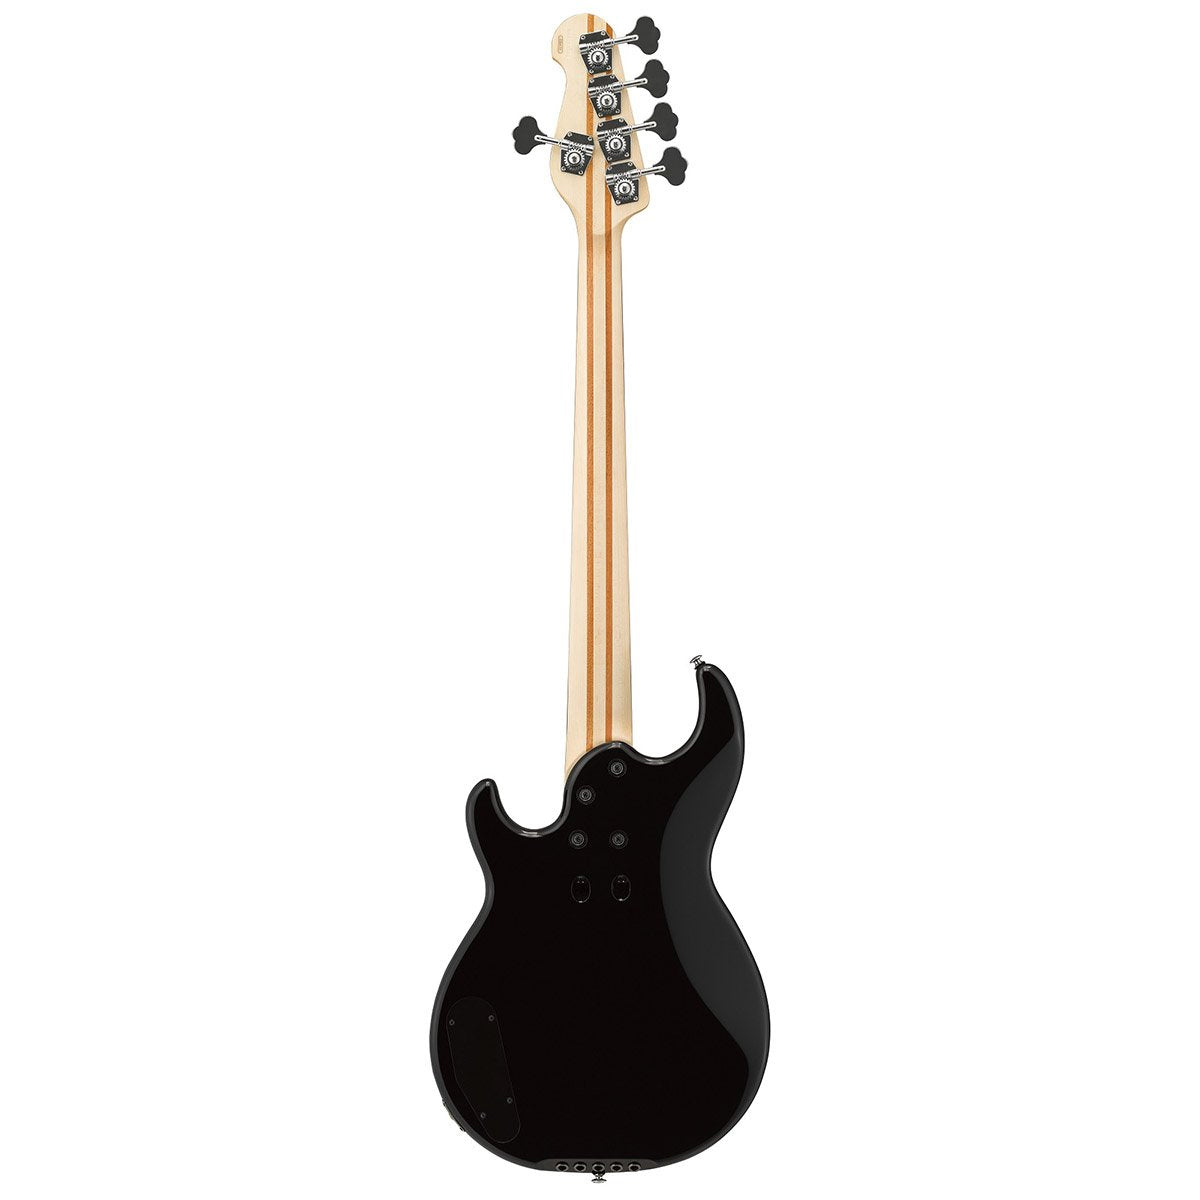 Yamaha BB 435 Electric 5-String Bass Guitar - Black